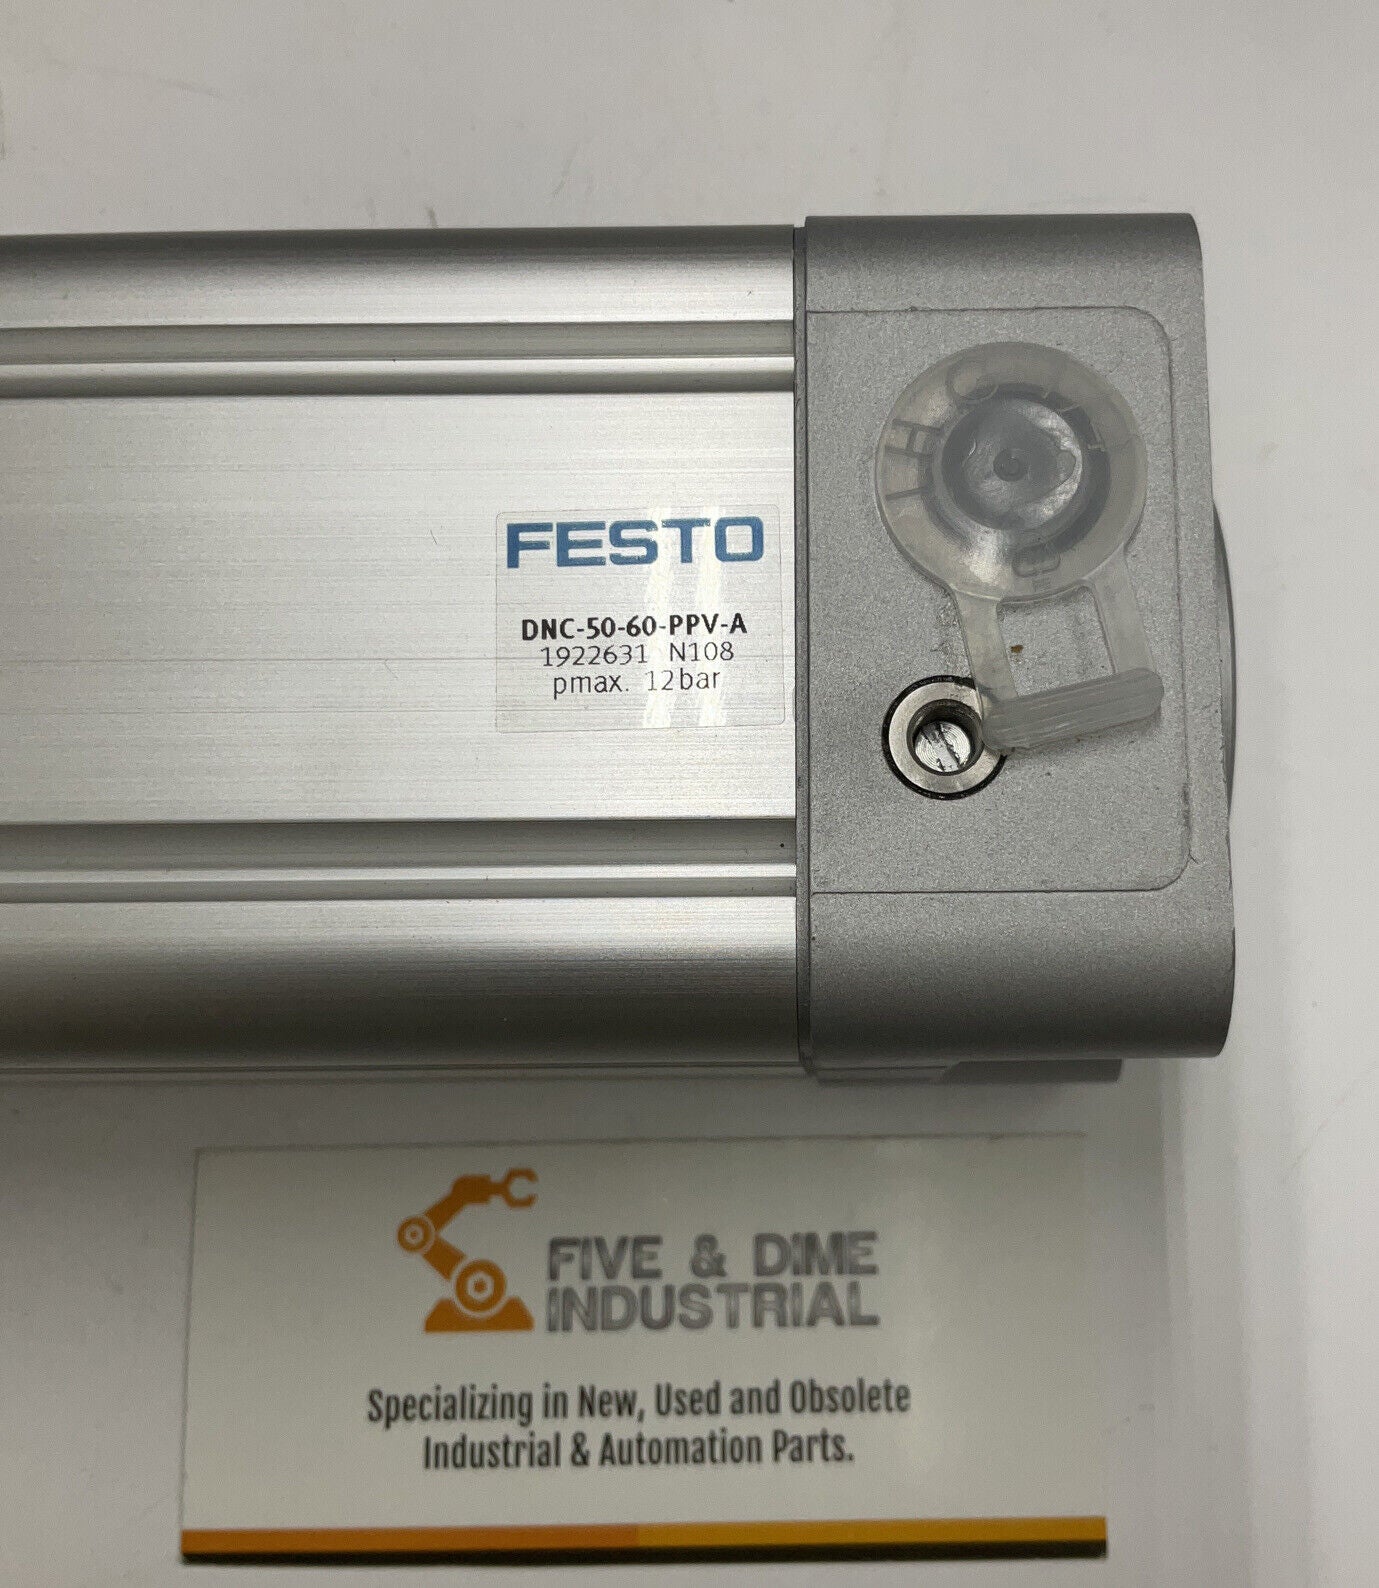 Festo DNC-50-60-PPV-A Pneumatic Cylinder 1922631 Ser. N108 (CL323) - 0